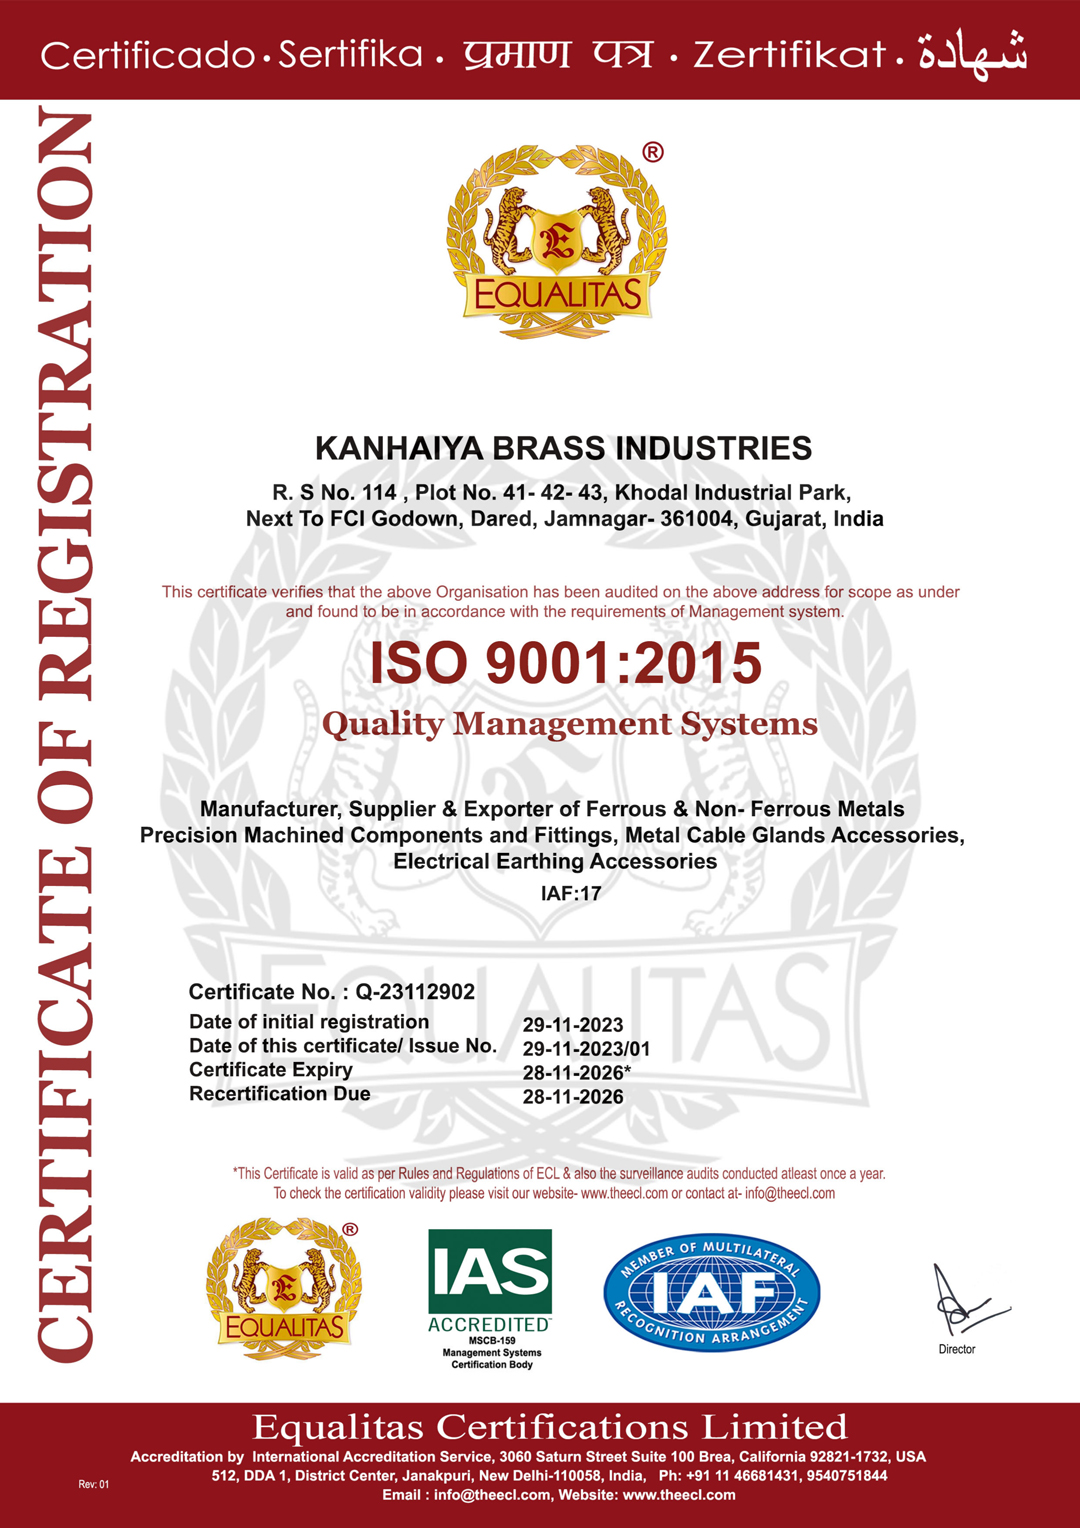 ISO 9001:2015 Certificate | Kanhaiya Brass Industries